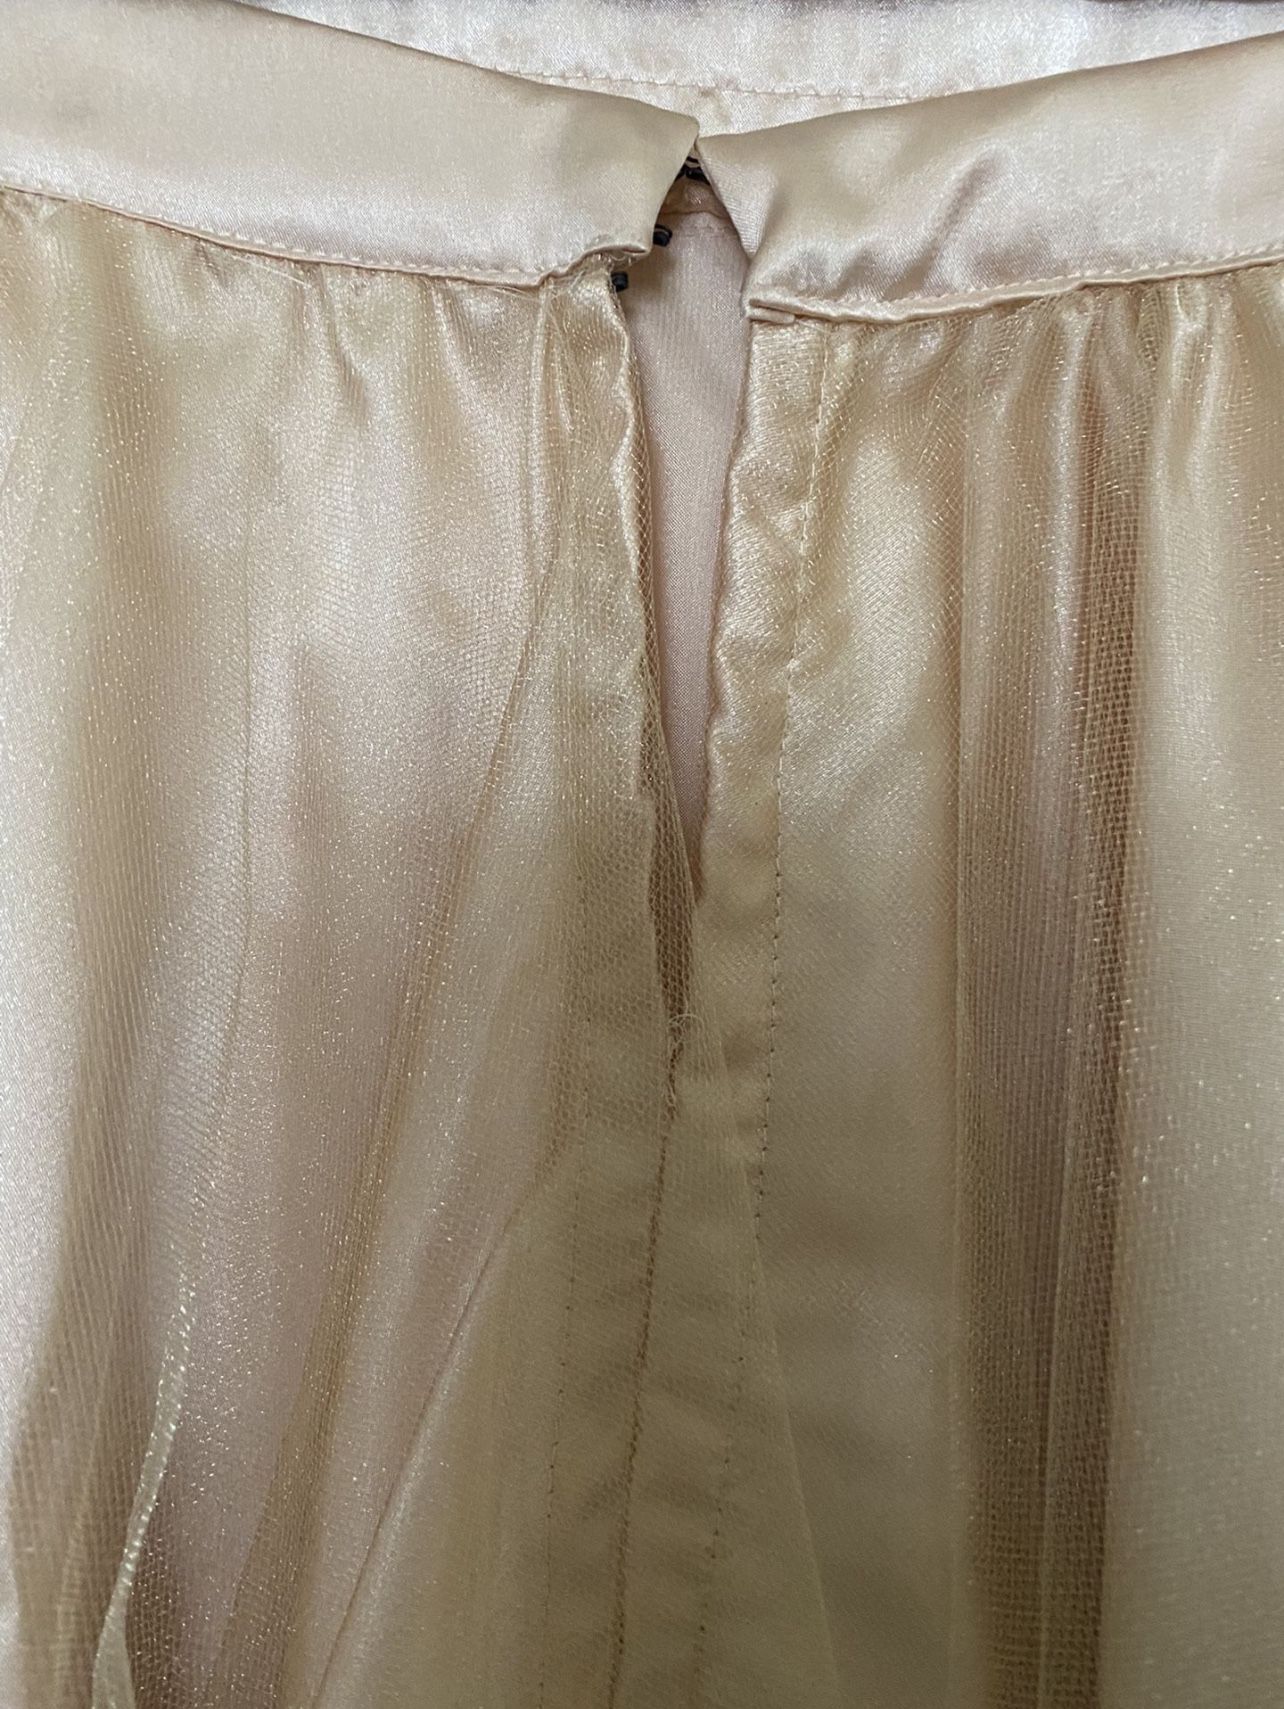 Holiday Oufit Inspo ✨ Vintage Peach Satin + Tulle Skirt 